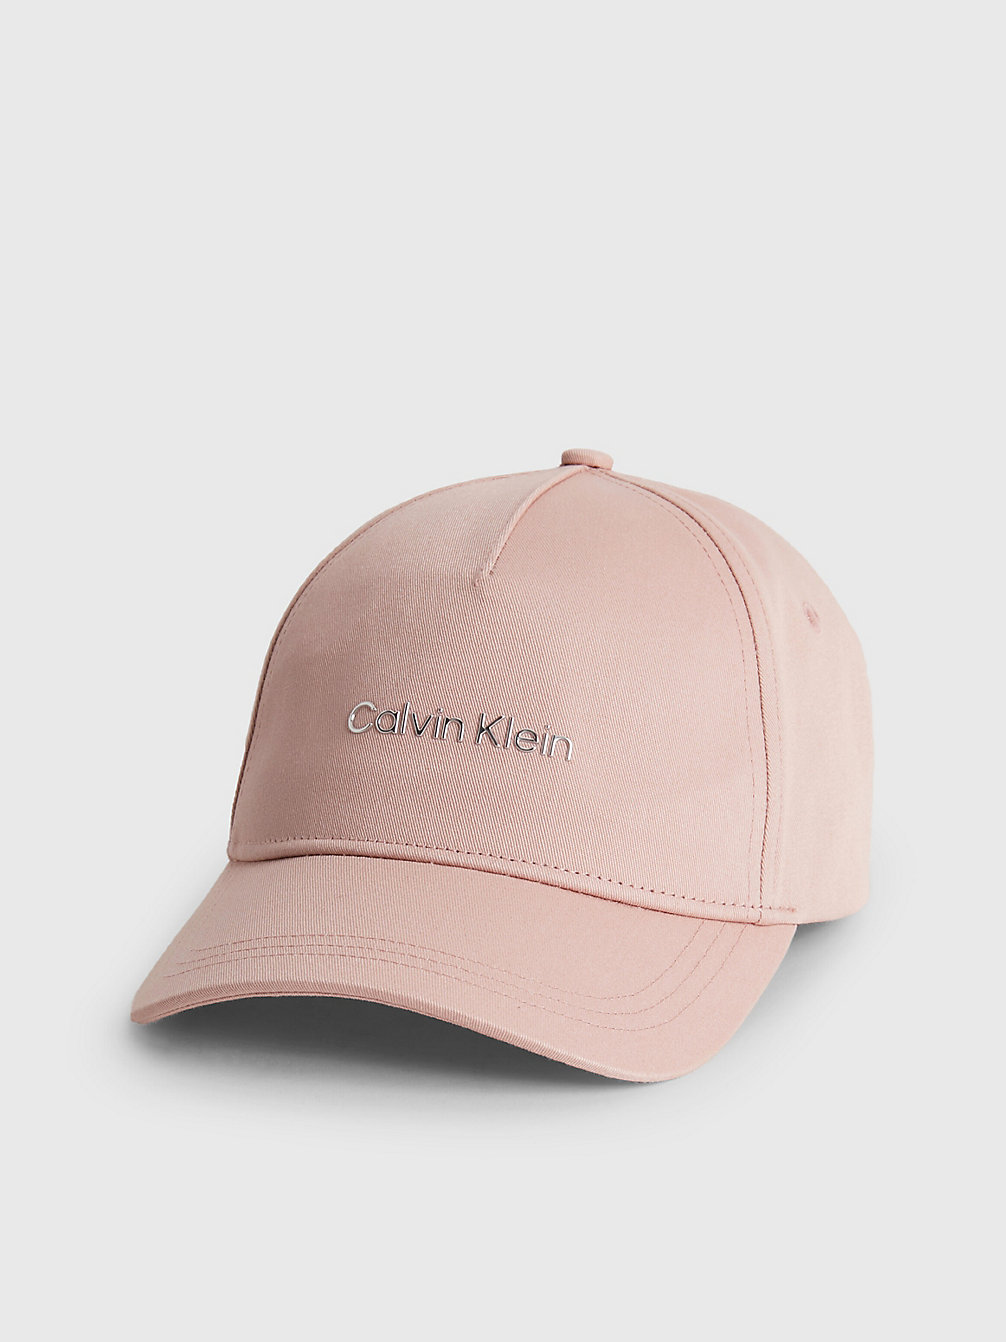 Women's Hats & Caps | Calvin Klein®